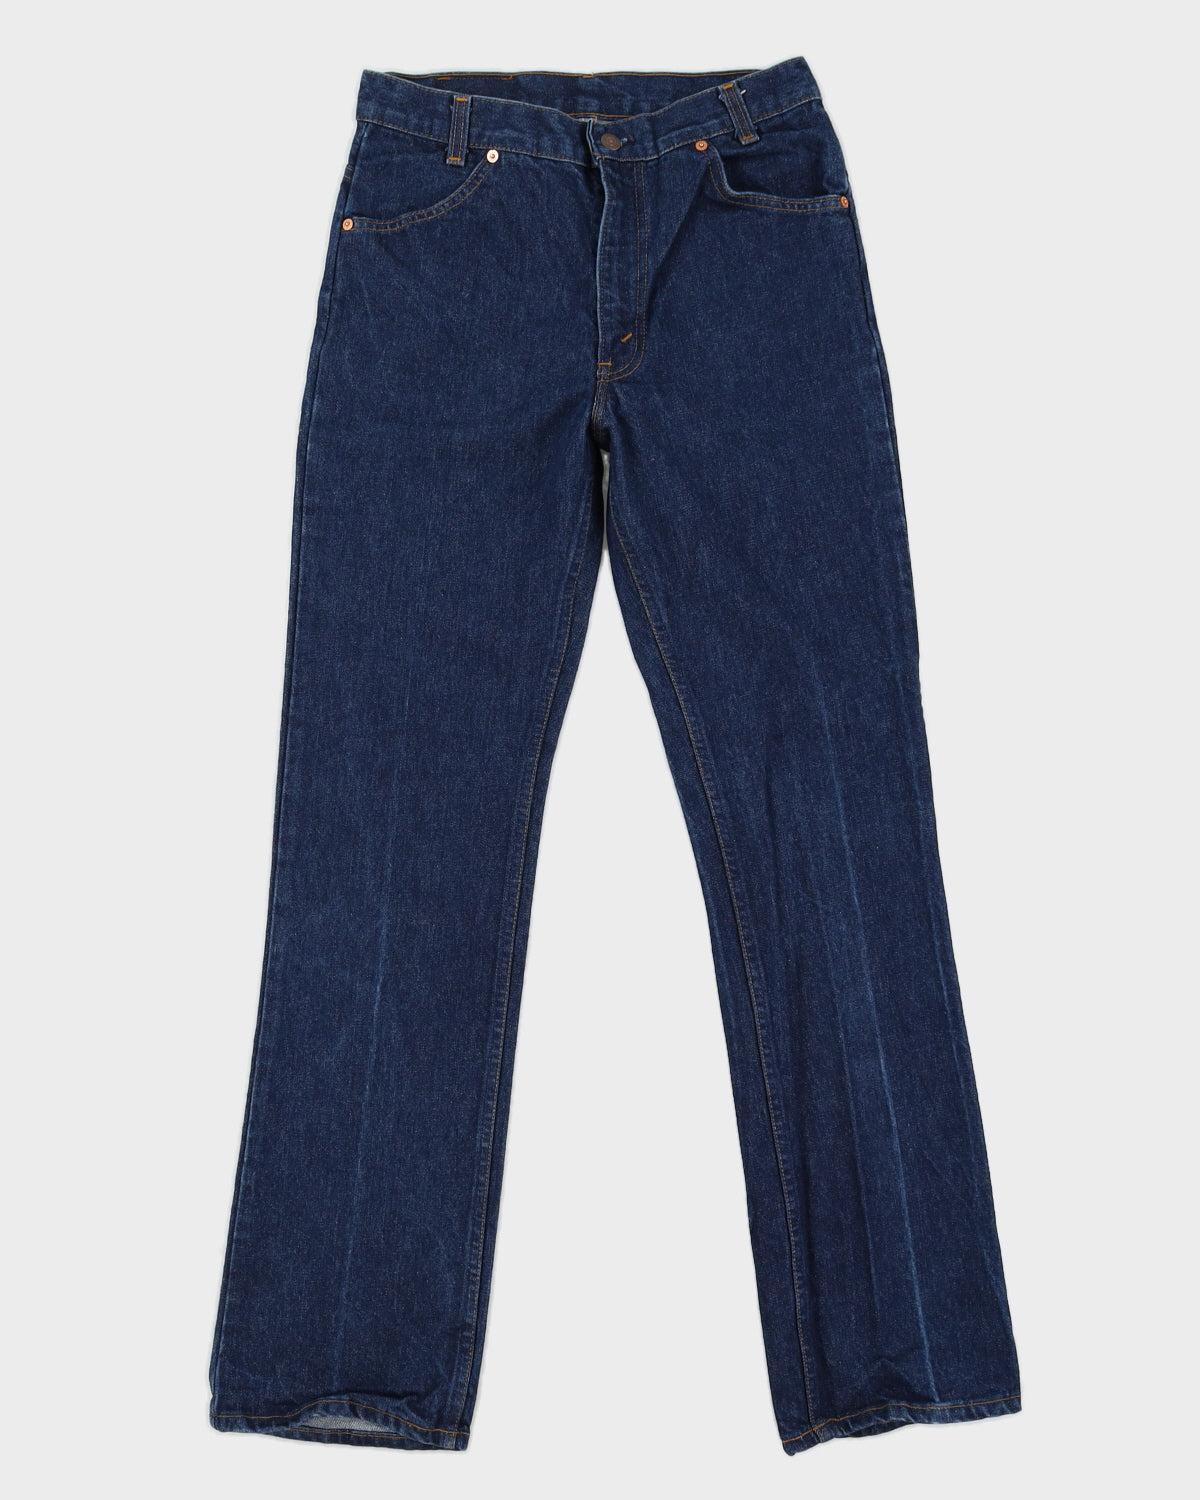 Vintage 80s Levi's Orange Tab Blue Jeans - W31 L33